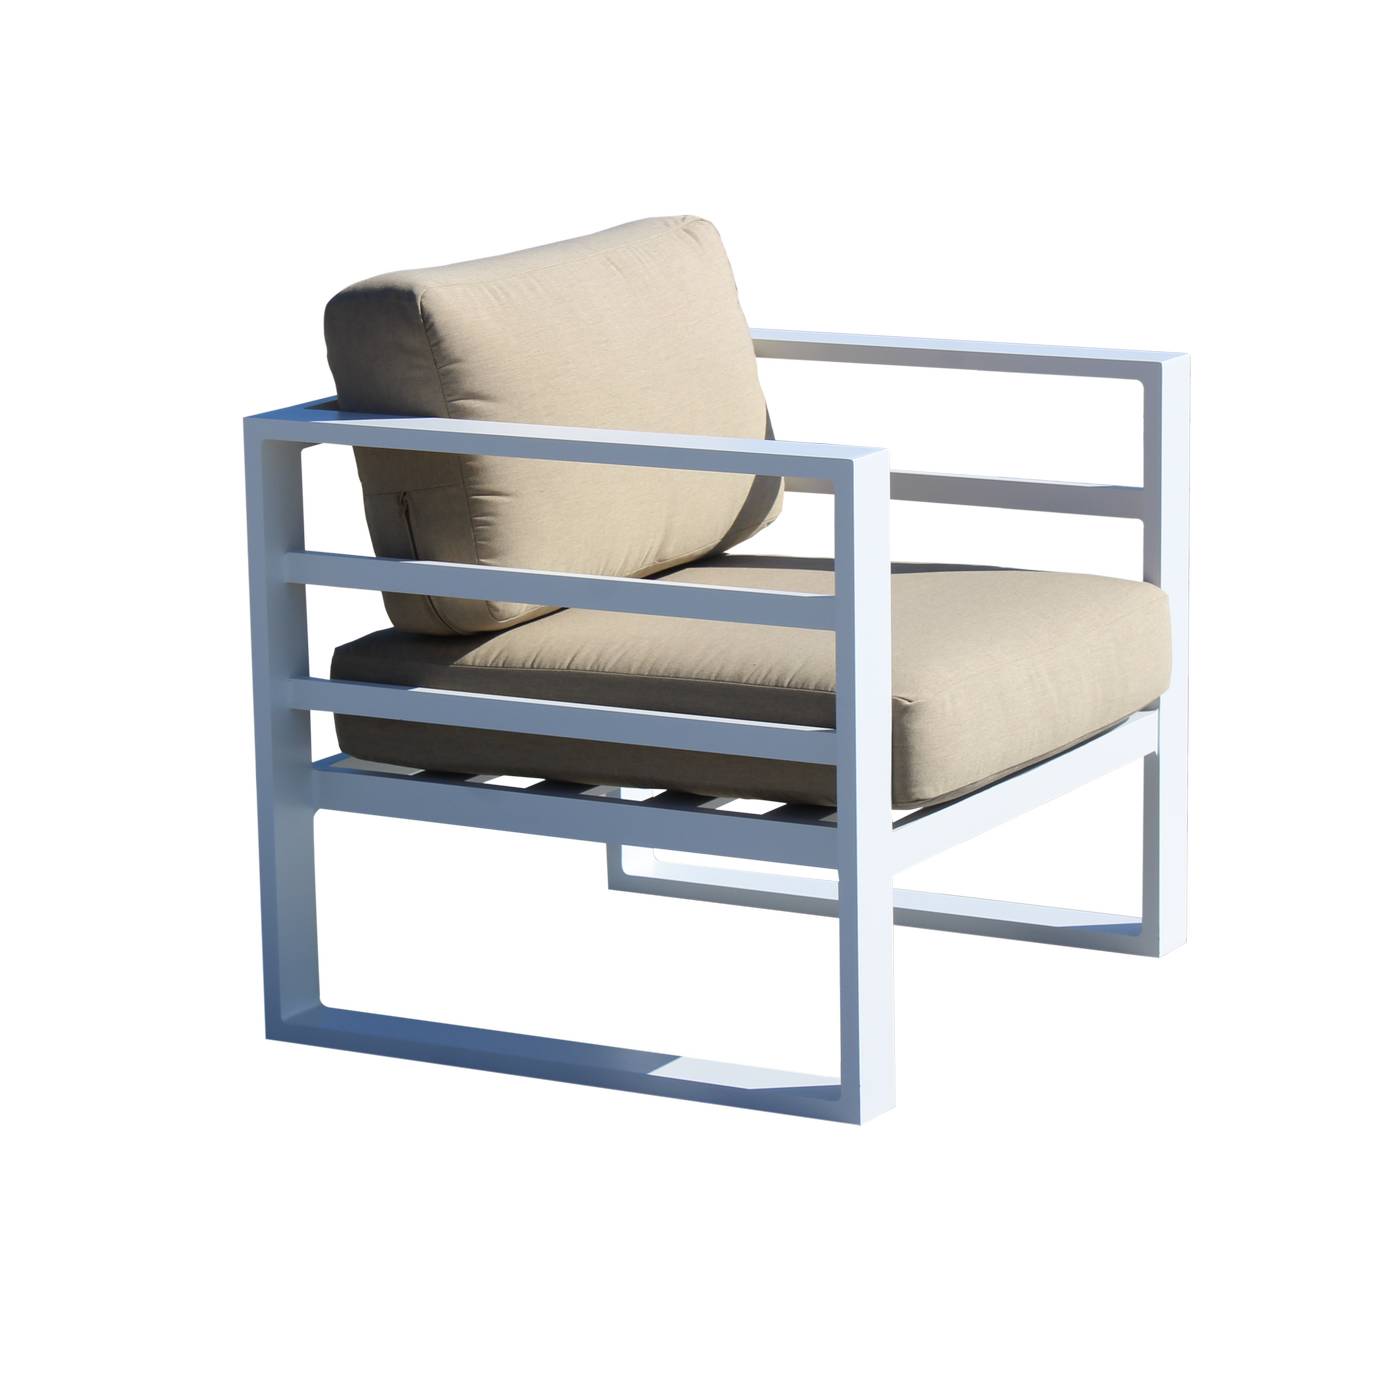 Set Aluminio Dalas-10 - Conjunto de aluminio para jardín o terraza: sofá 3 plazas + 2 sillones + mesa de centro + 2 taburetes. Disponible en color blanco o antracita..